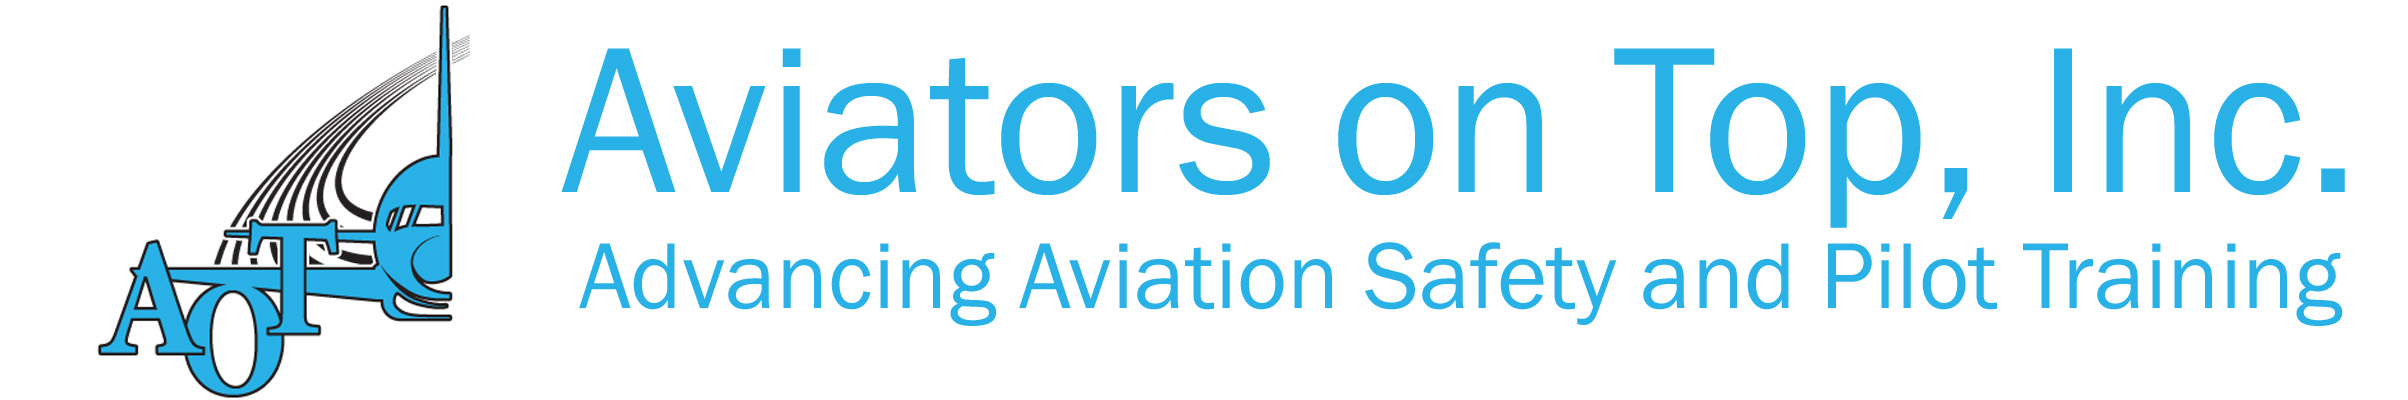 Aviators on Top, Inc.